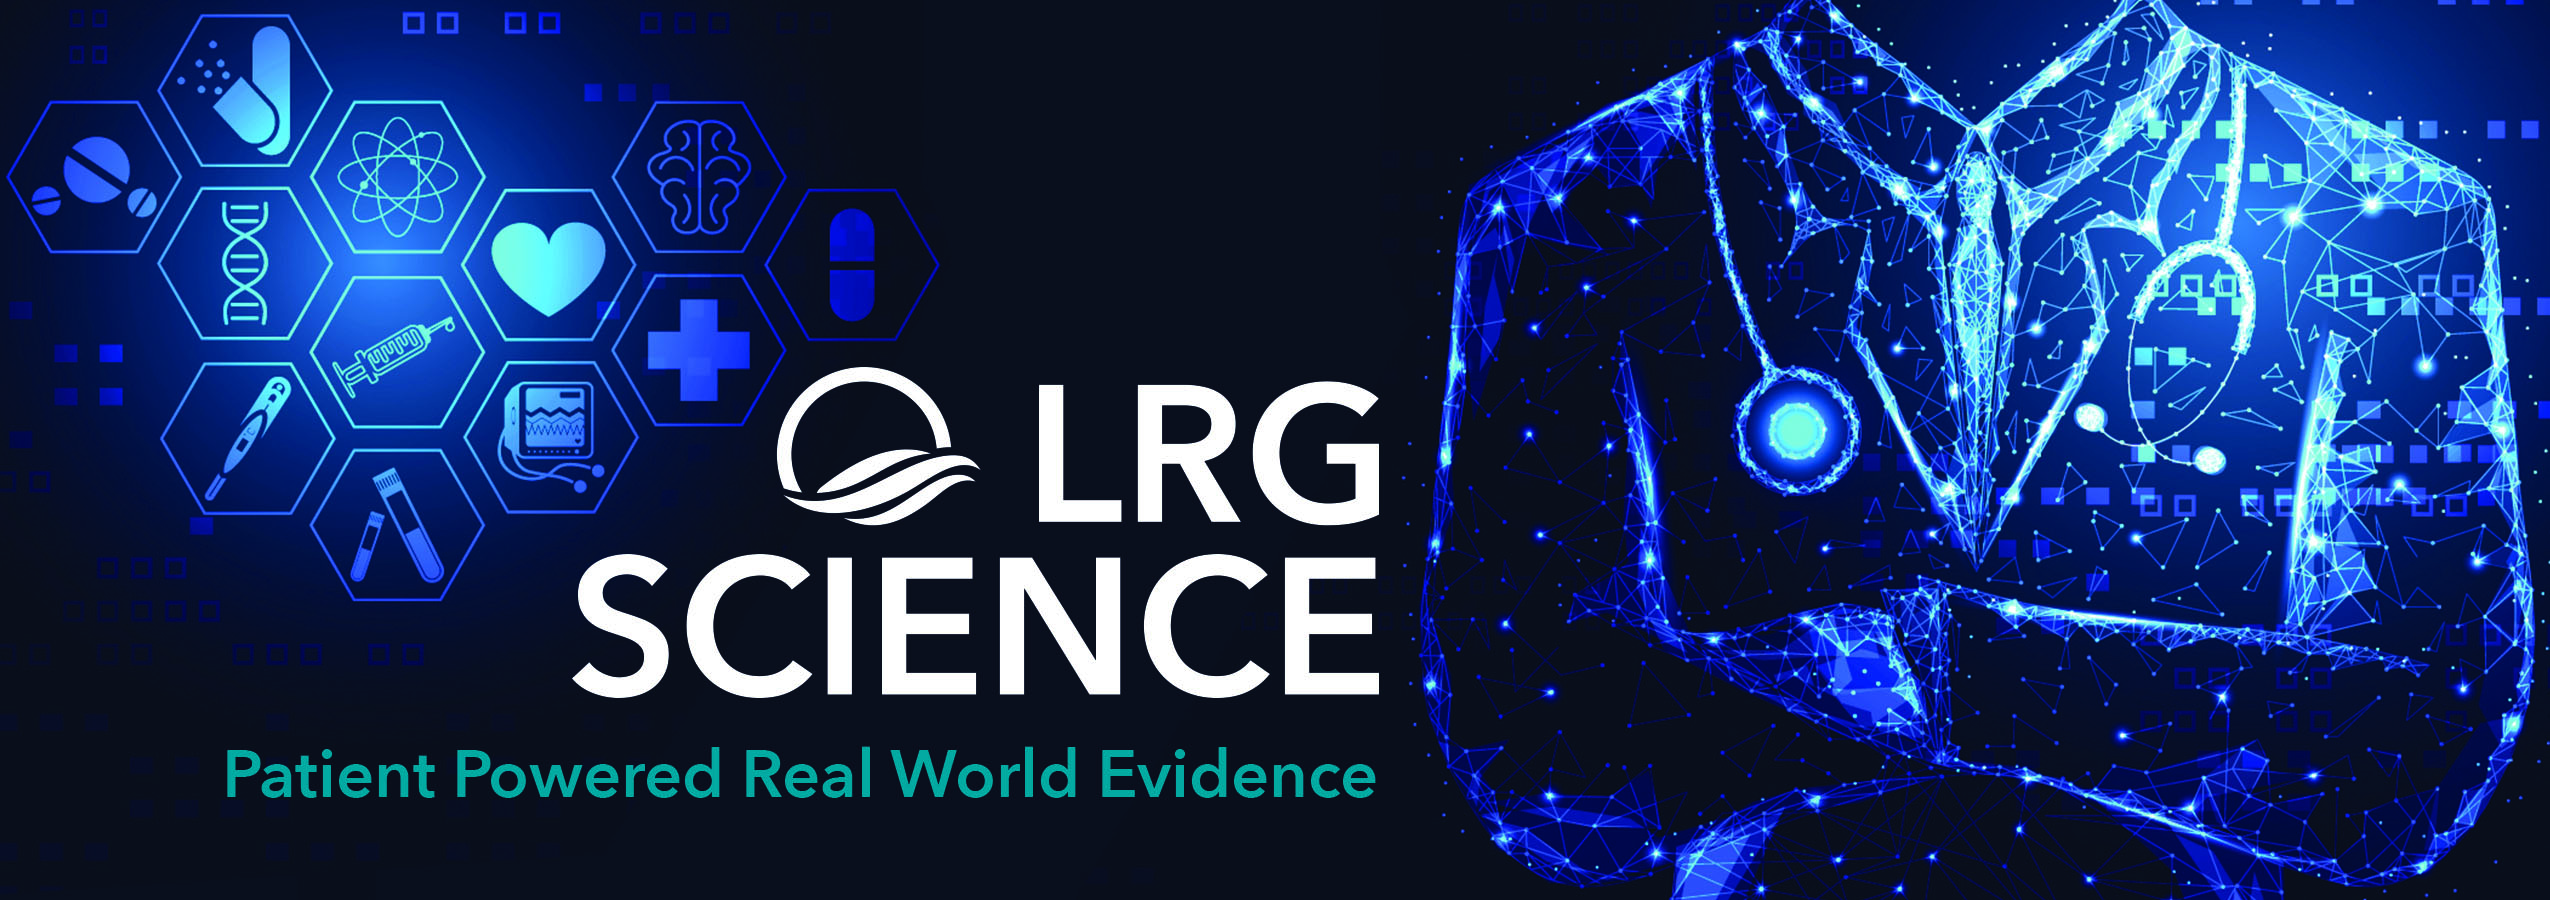 LRG Science Bulletin Banner